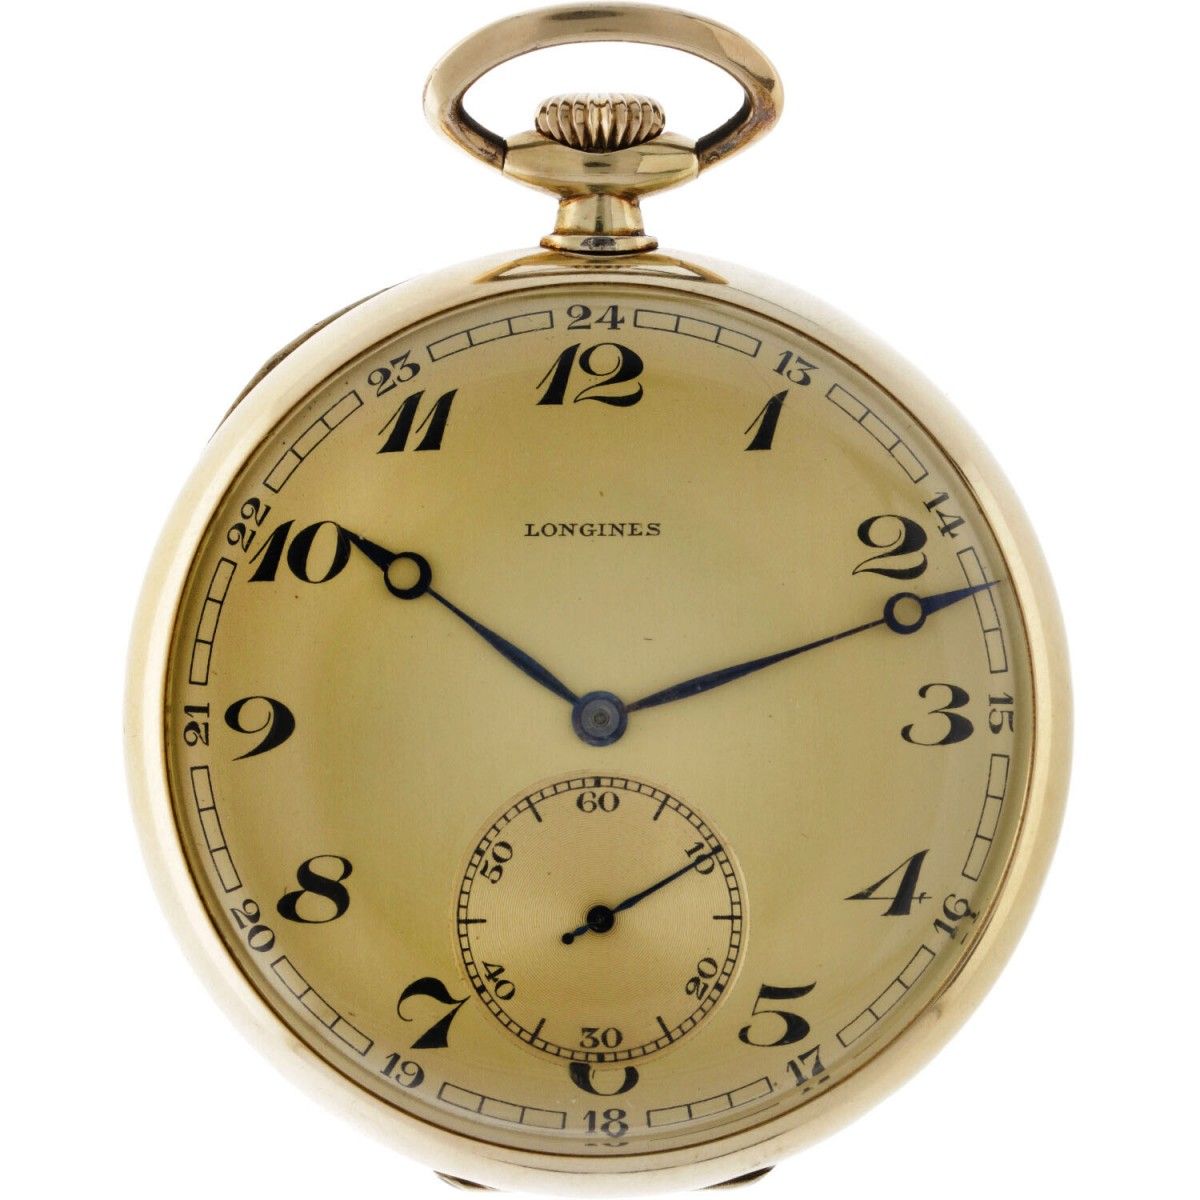 Longines Lever Escapement - Men's pocket watch - apprx. 1888. Gehäuse: Gelbgold &hellip;